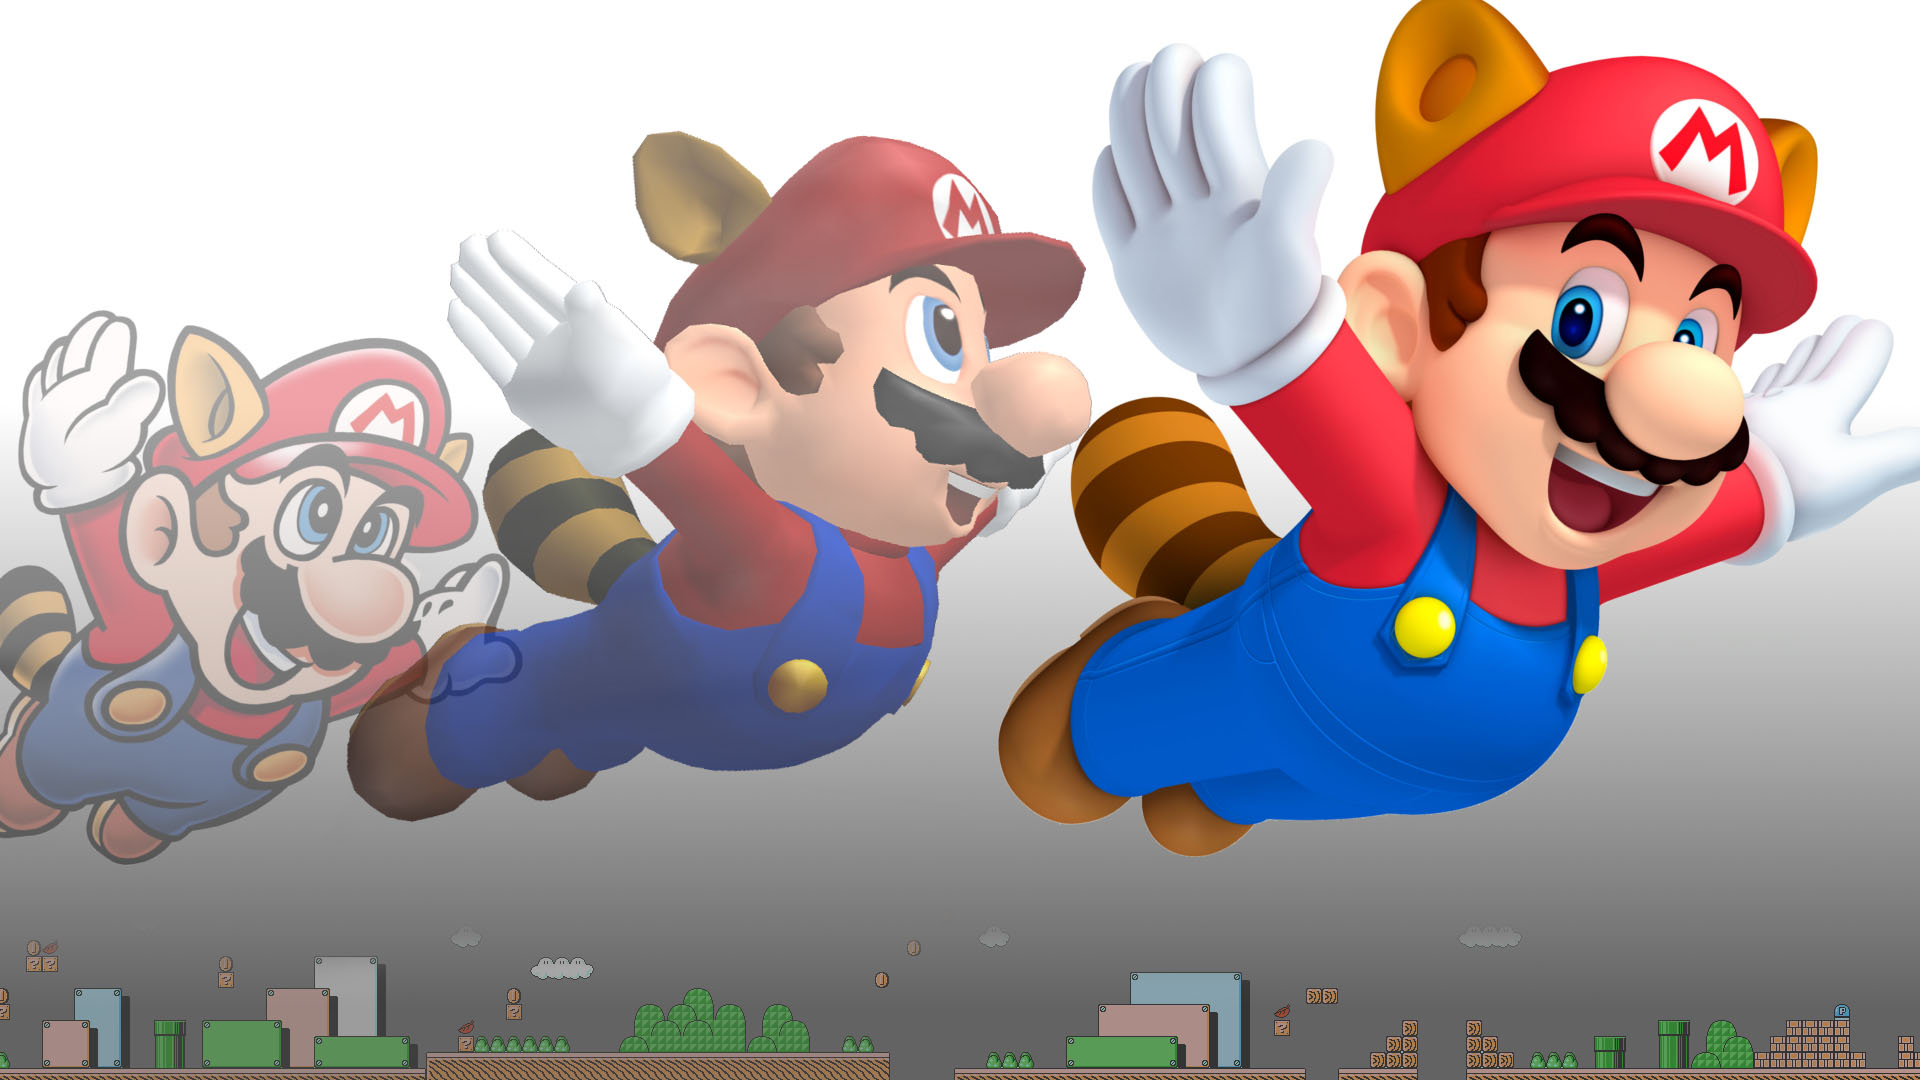 Video Game Super Mario Bros. 3 HD Wallpaper | Background Image